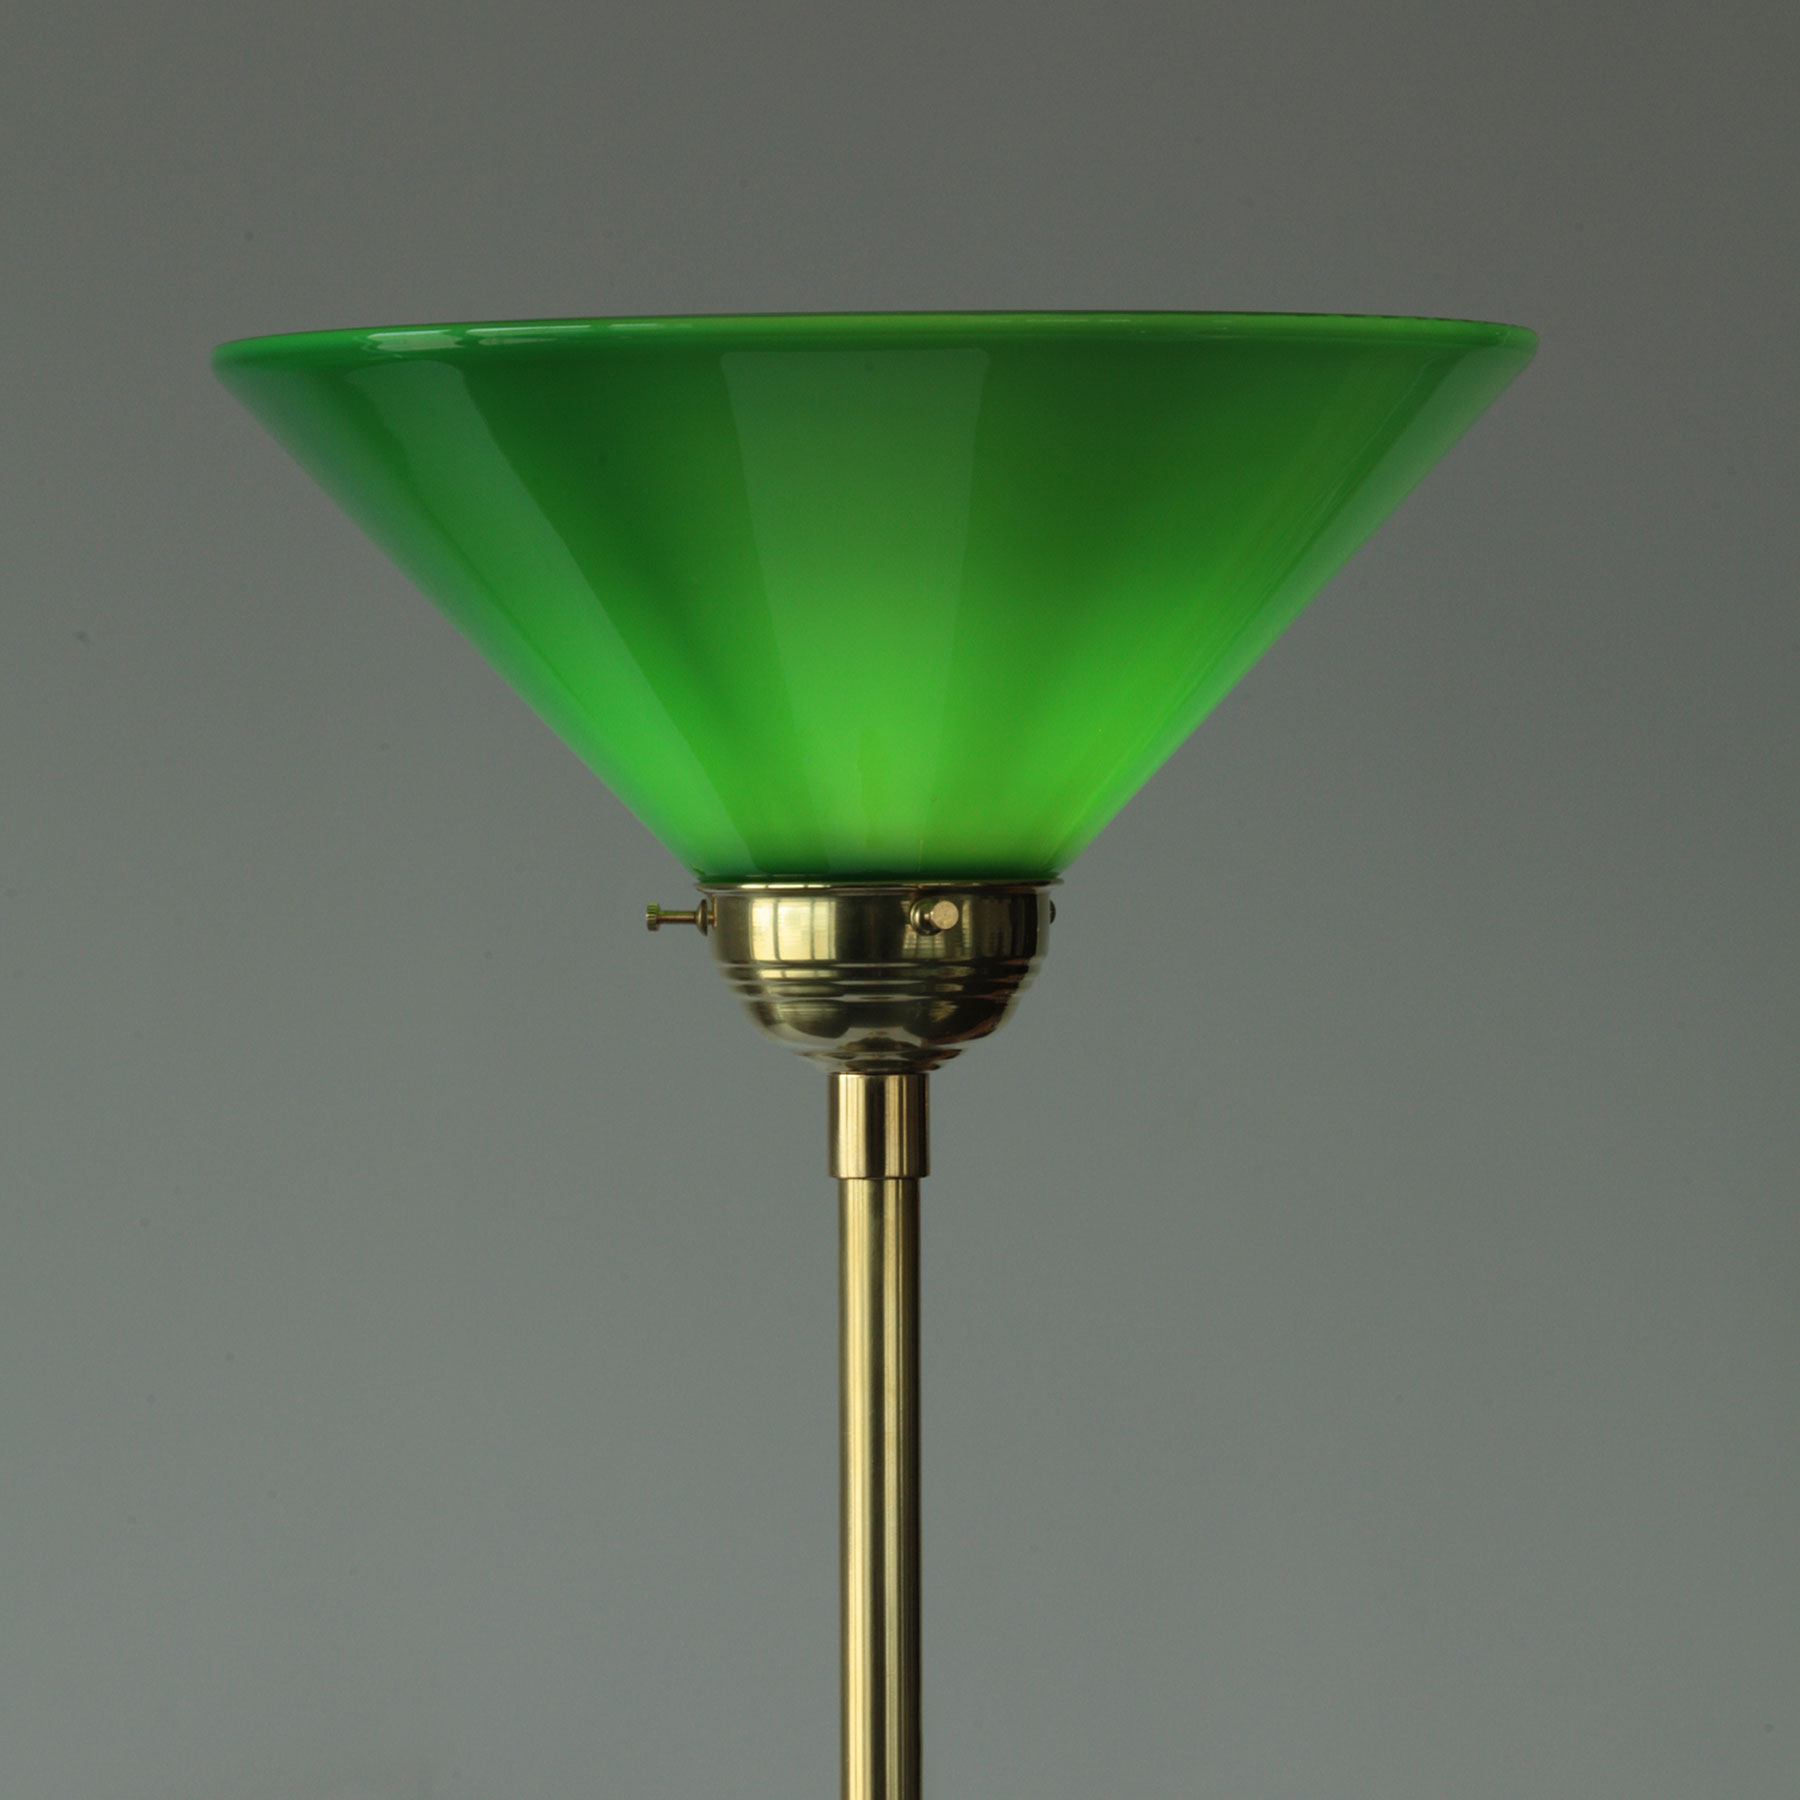 Jugendstil-Deckenfluter mit Kegel-Glasschirm: Messing poliert, unlackiert, mit grünem Kegel-Glasschirm (eingeschaltet)